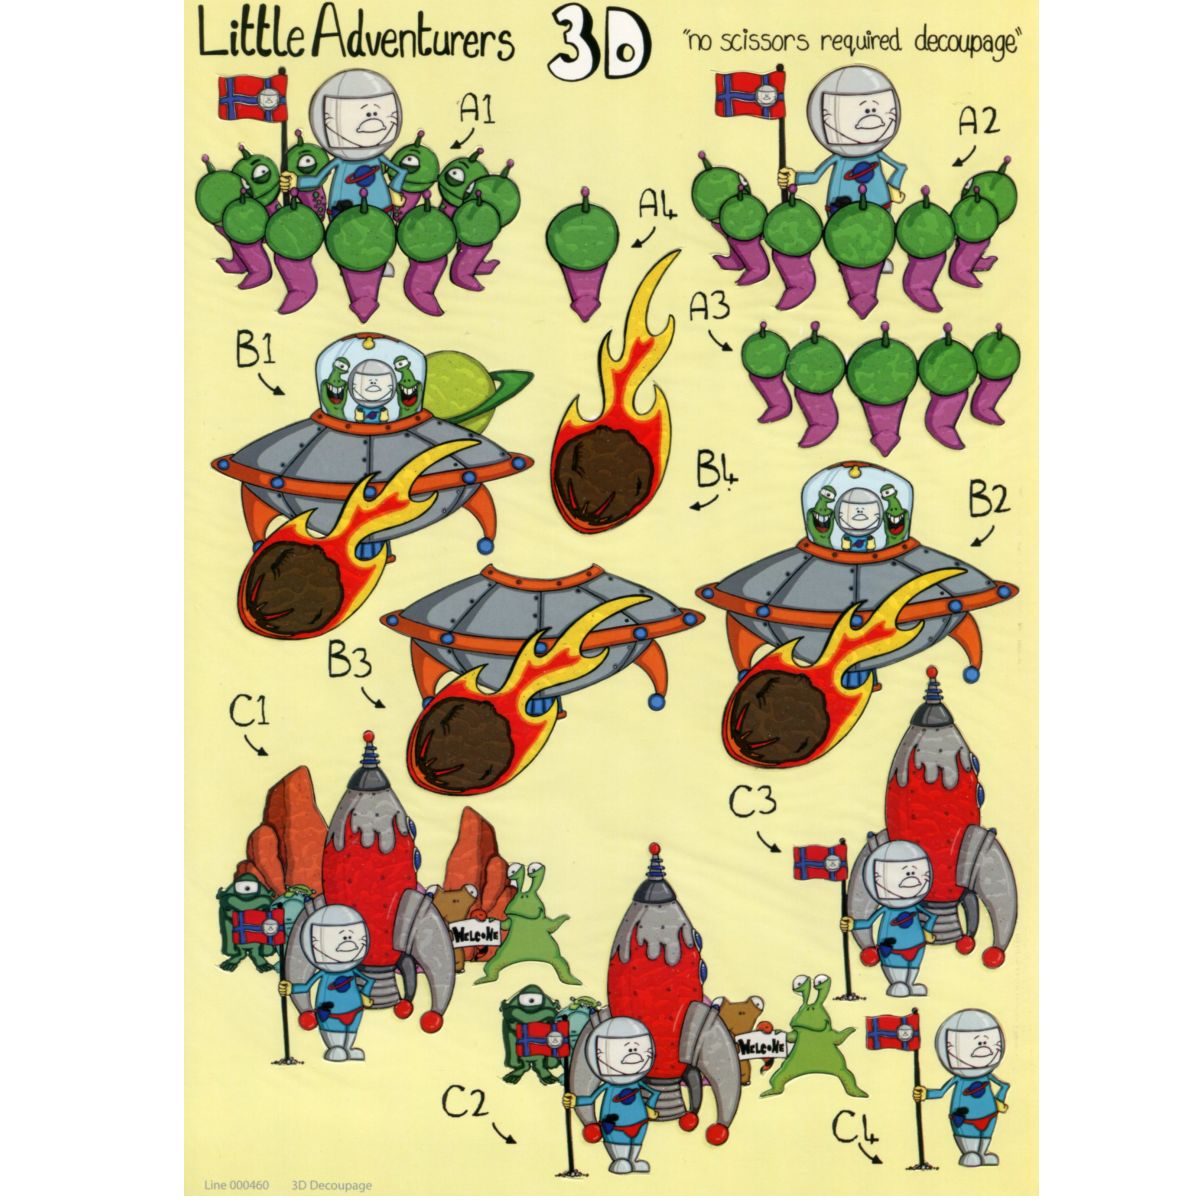 Little Adventurers 3D decoupage for kids